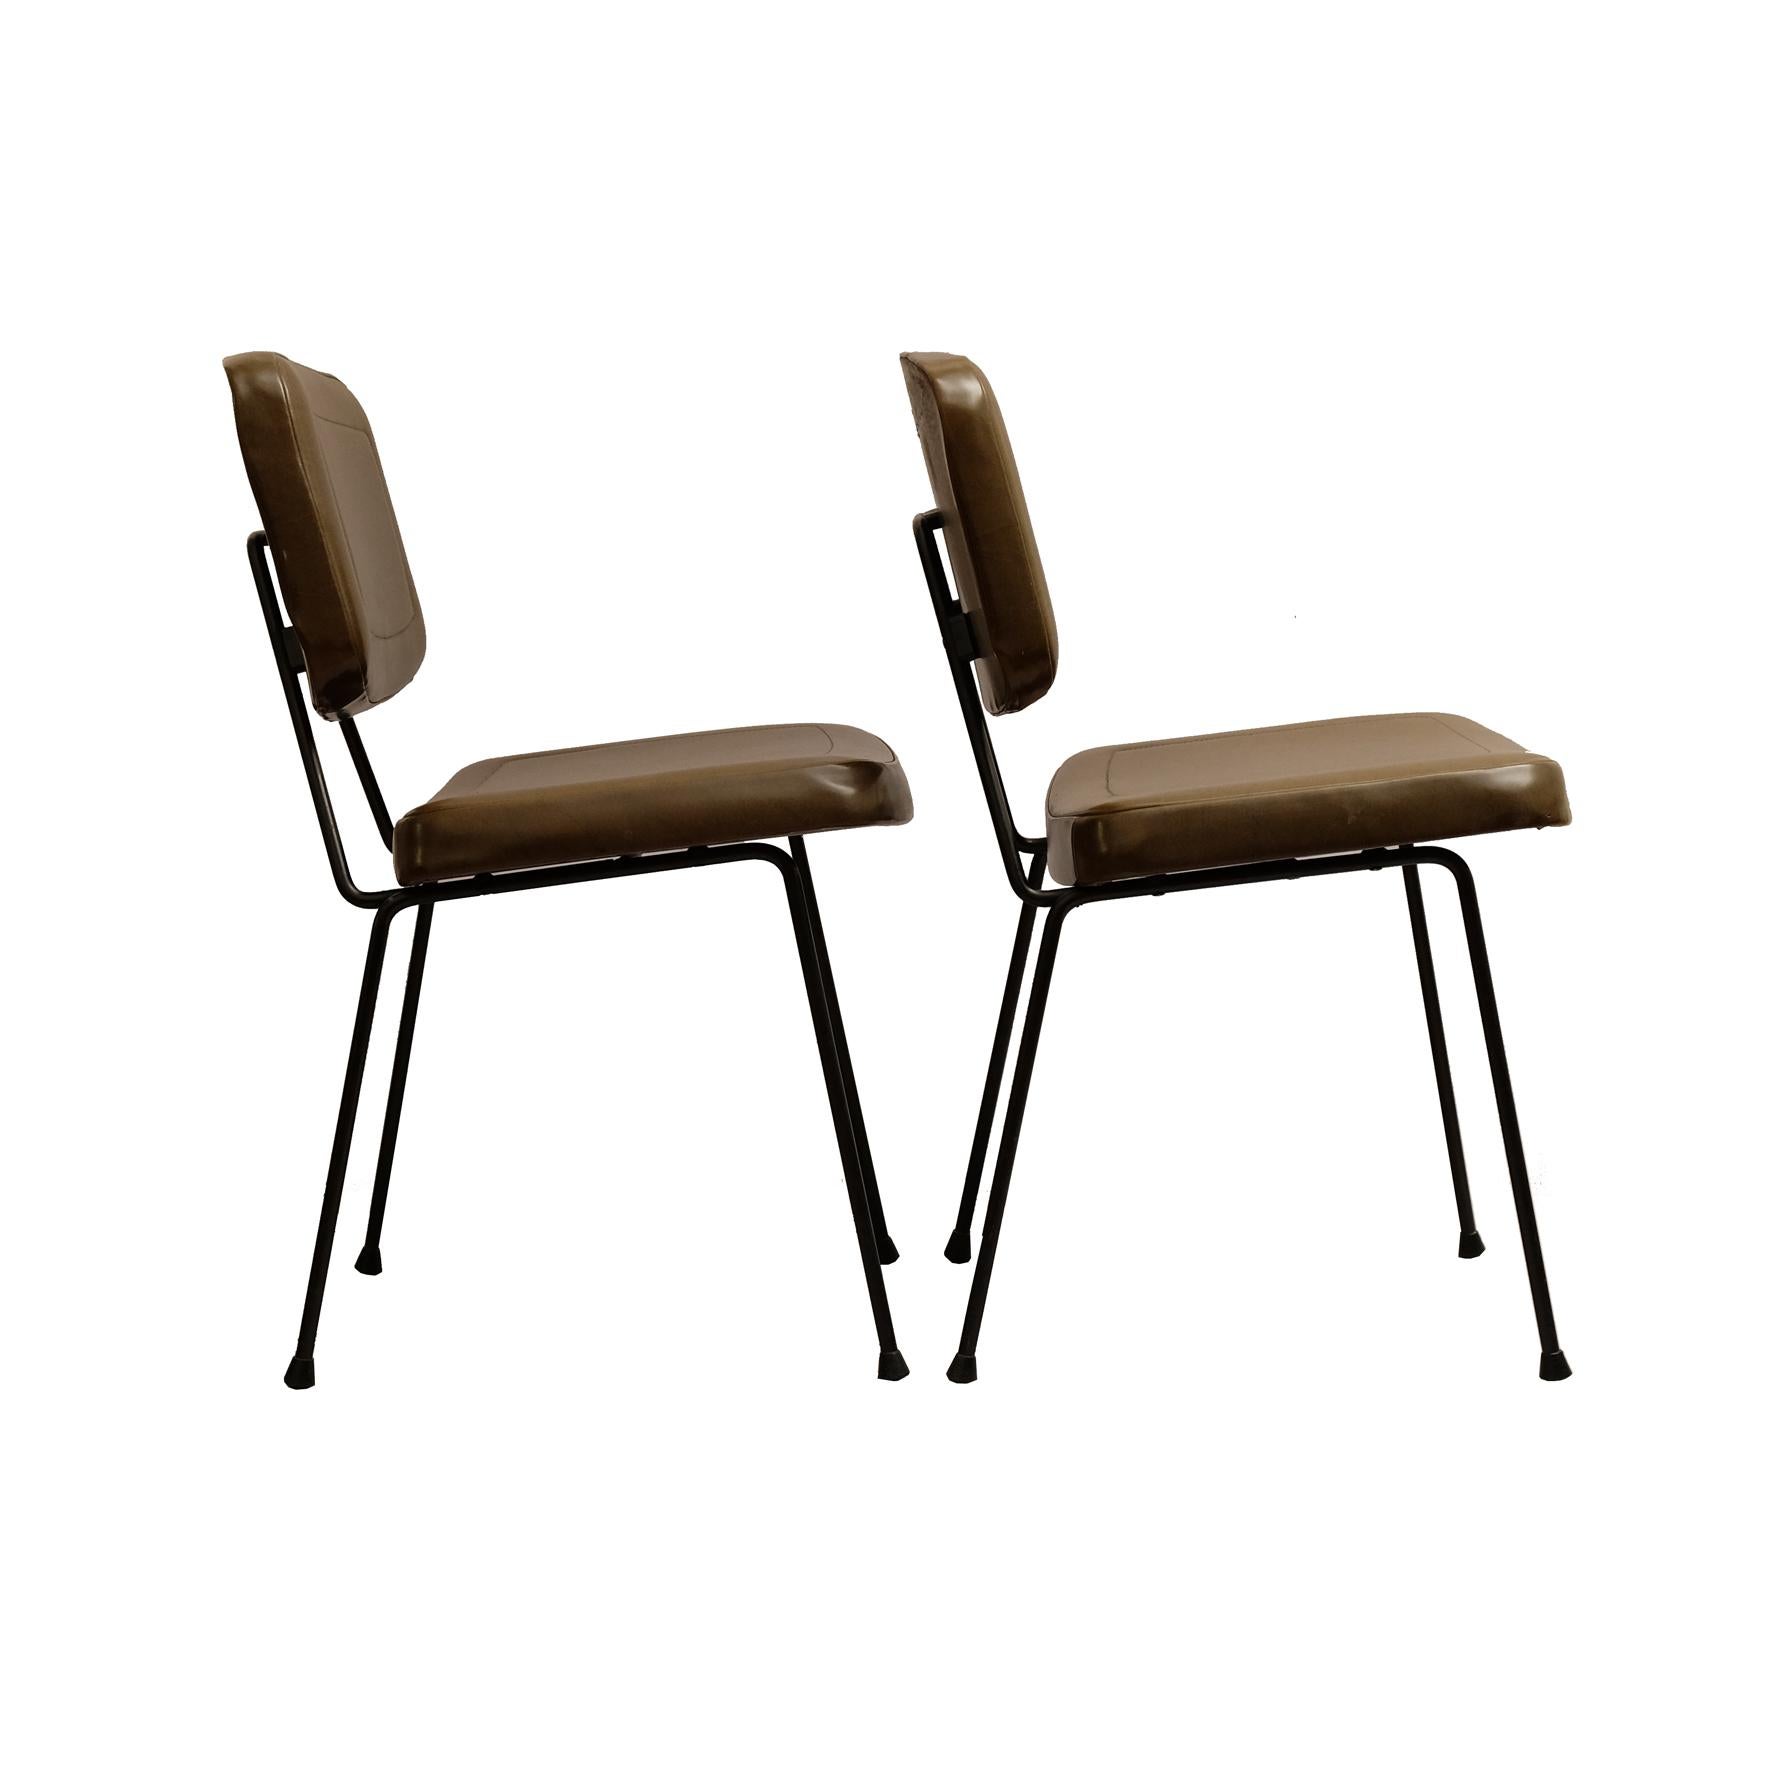 Pierre Paulin, a Pair of Chairs, Model CM 196, Thonet, 1960s (Mitte des 20. Jahrhunderts)